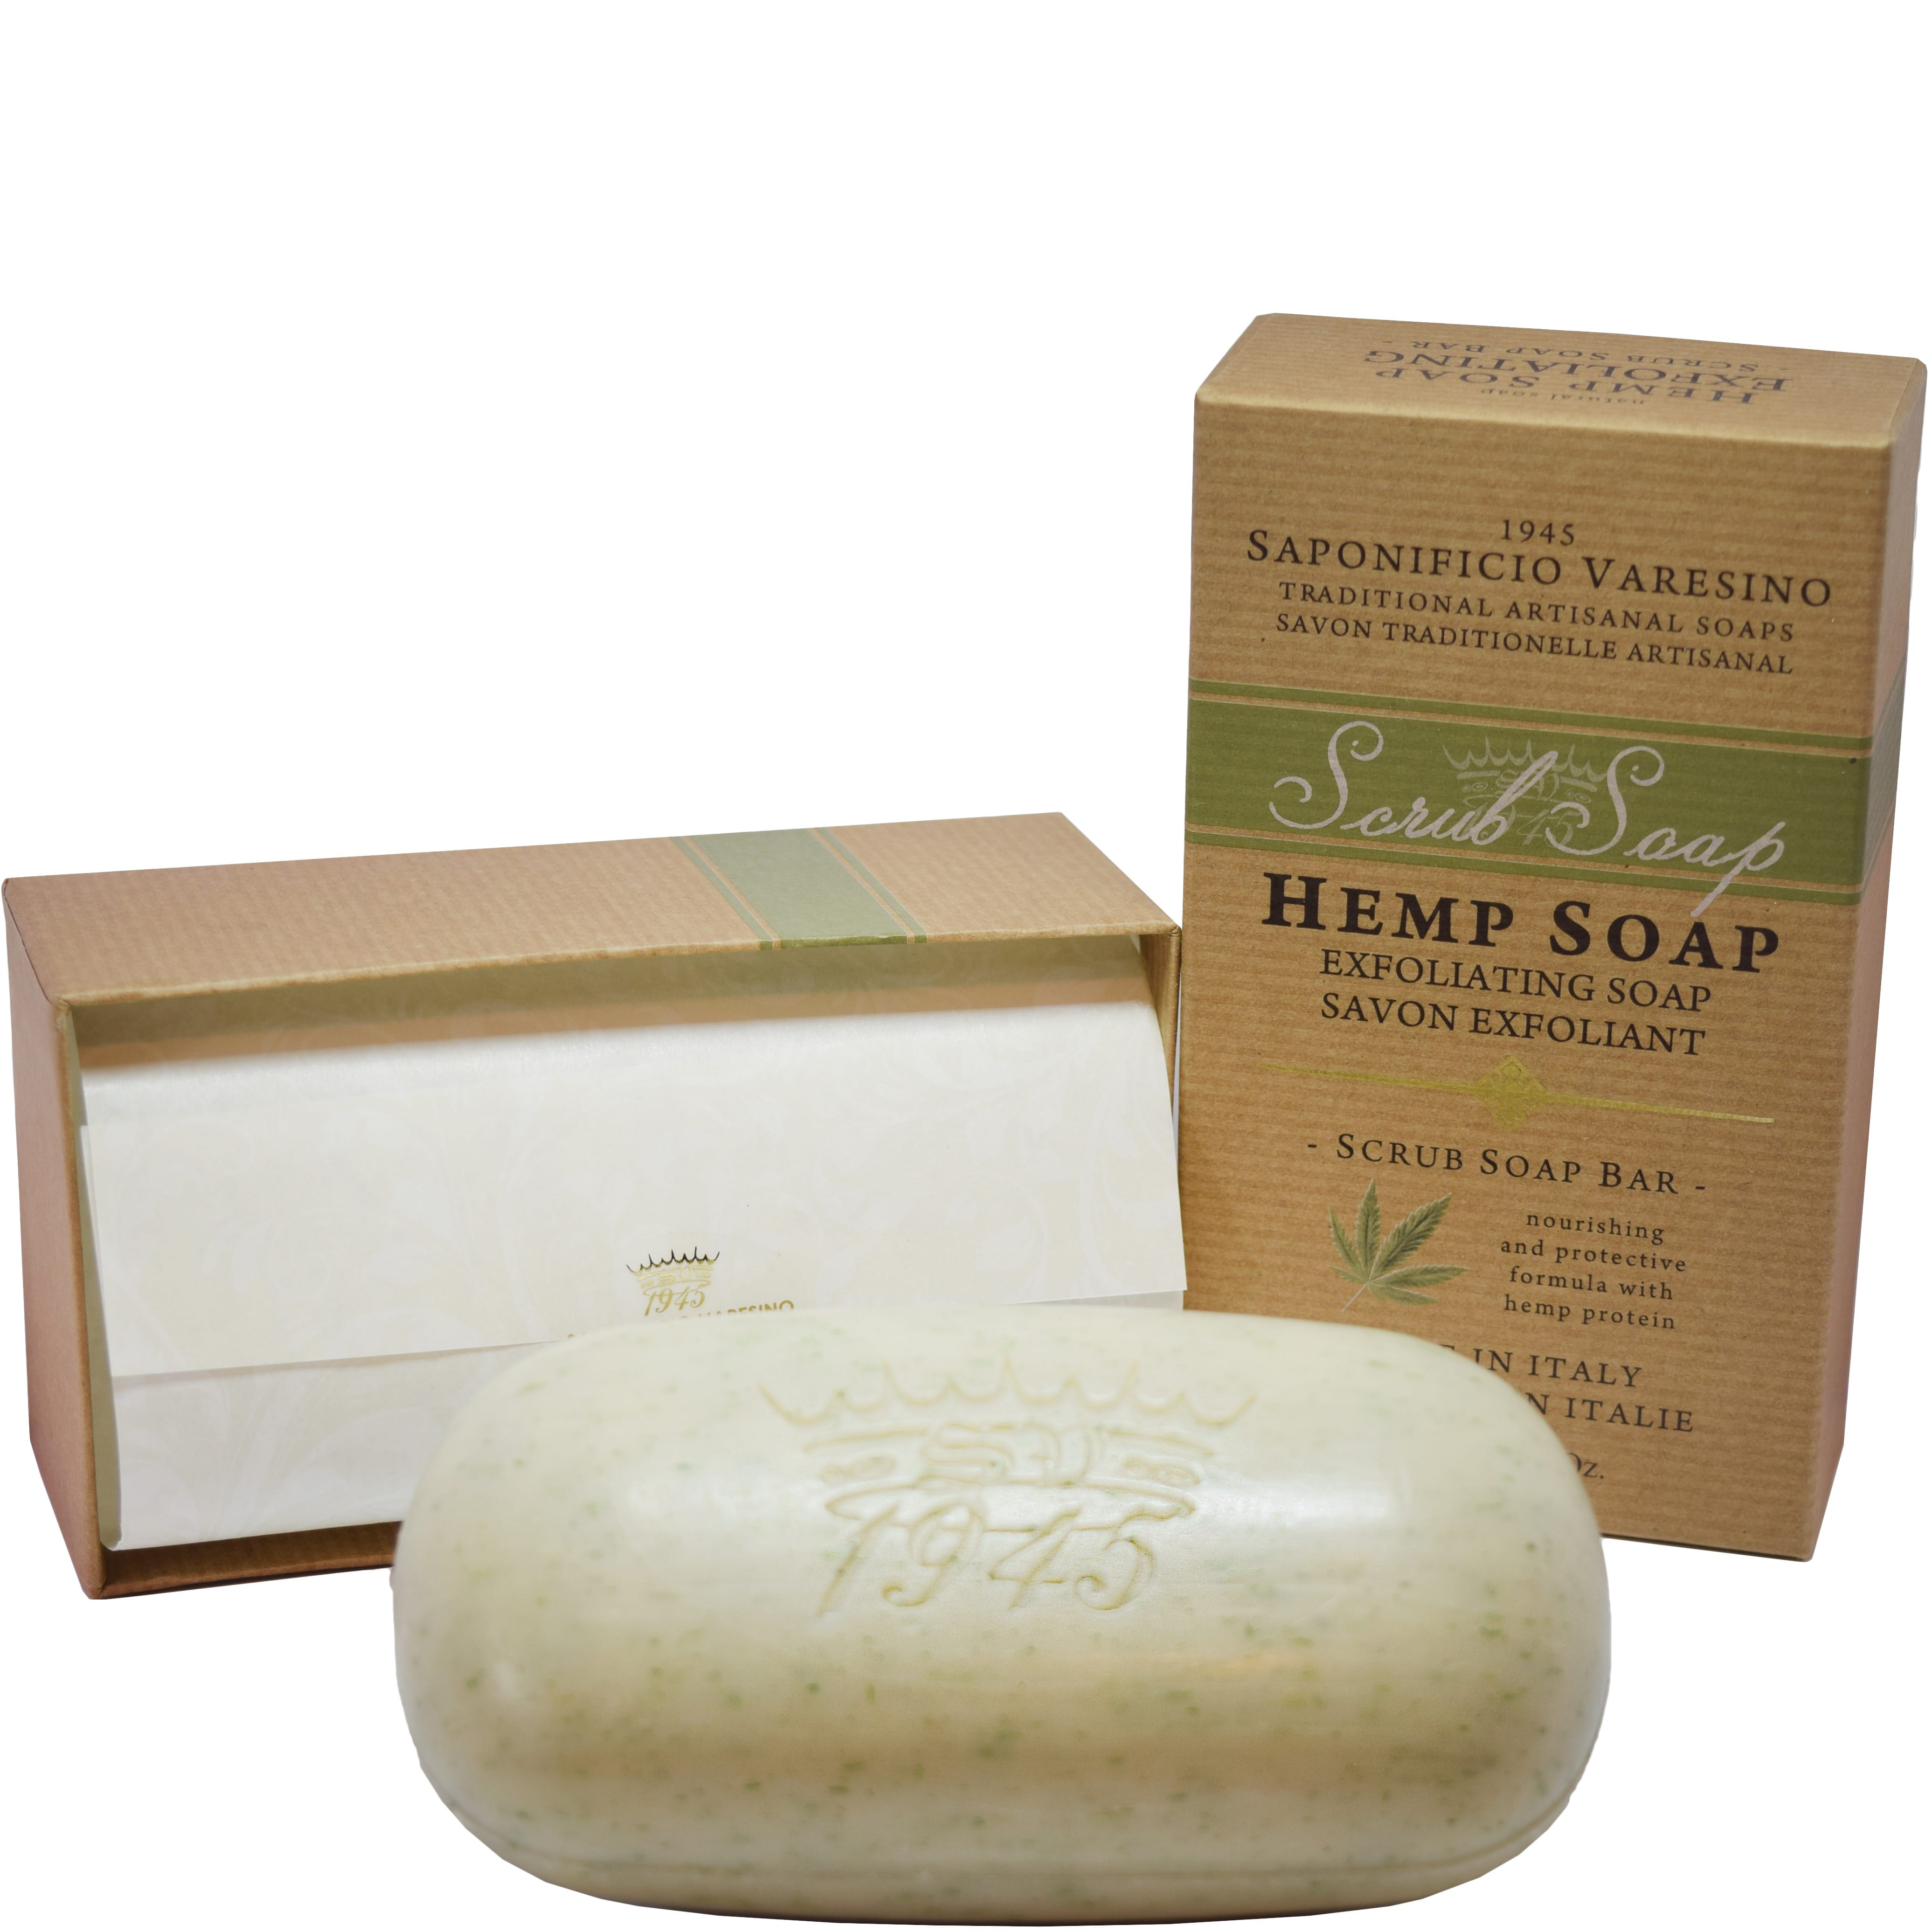 Hand- & Body Scrub Soap Hemp